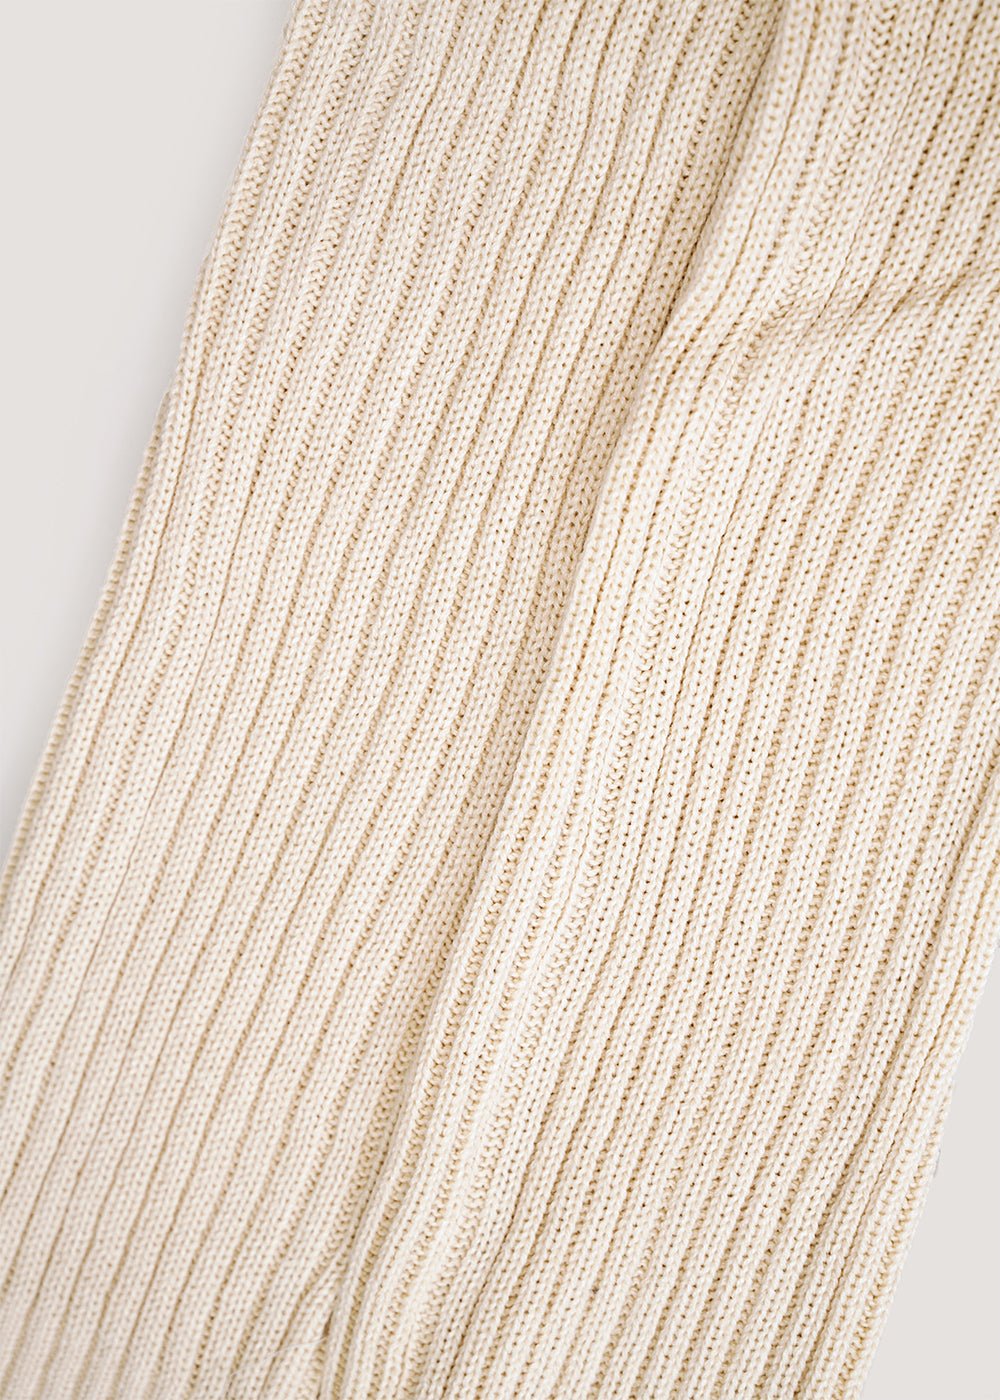 British wool knitted Leg Warmers - Charl Knitwear